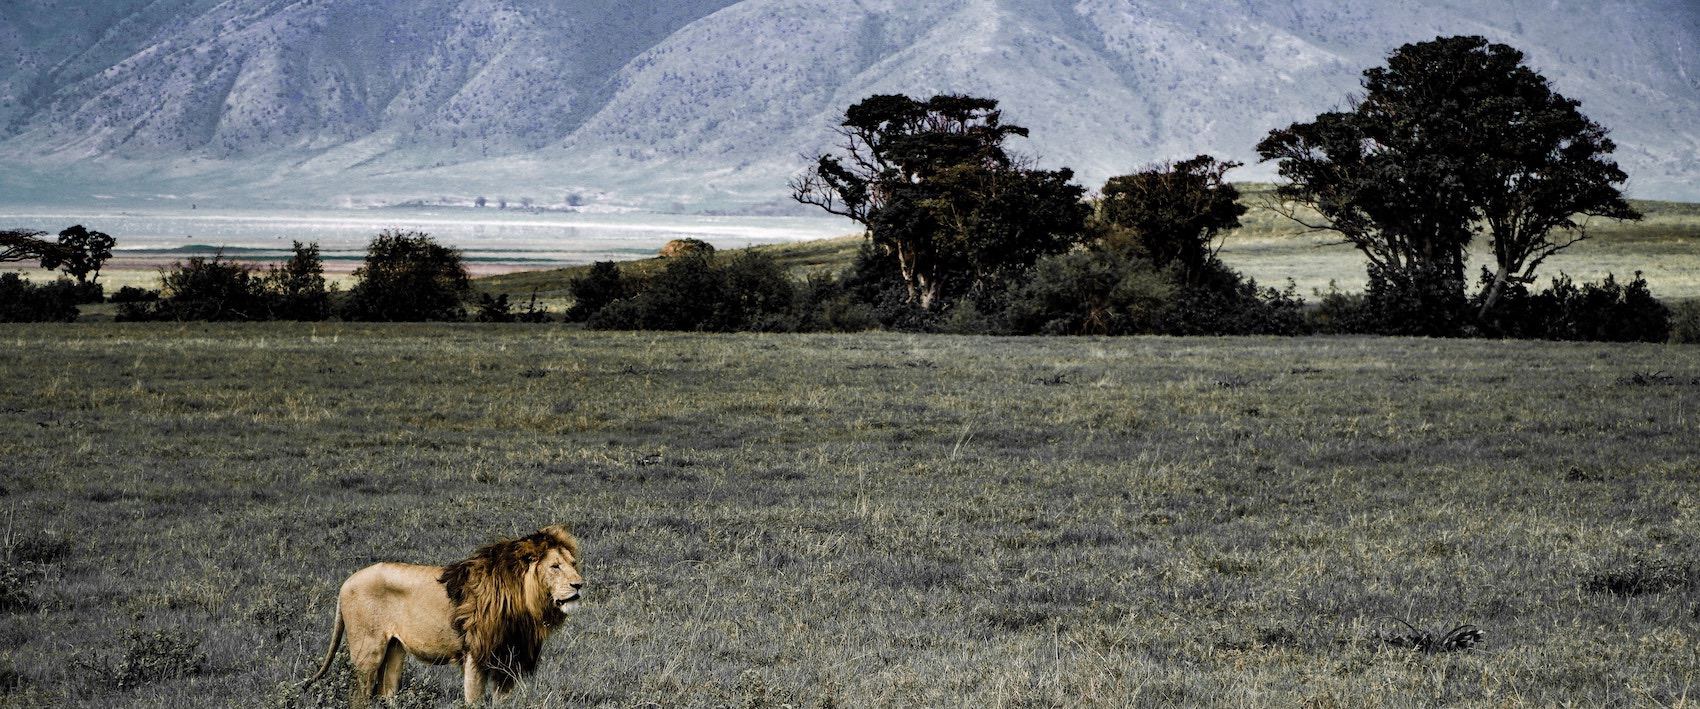 Lion solitaire en profonde savane africaine 